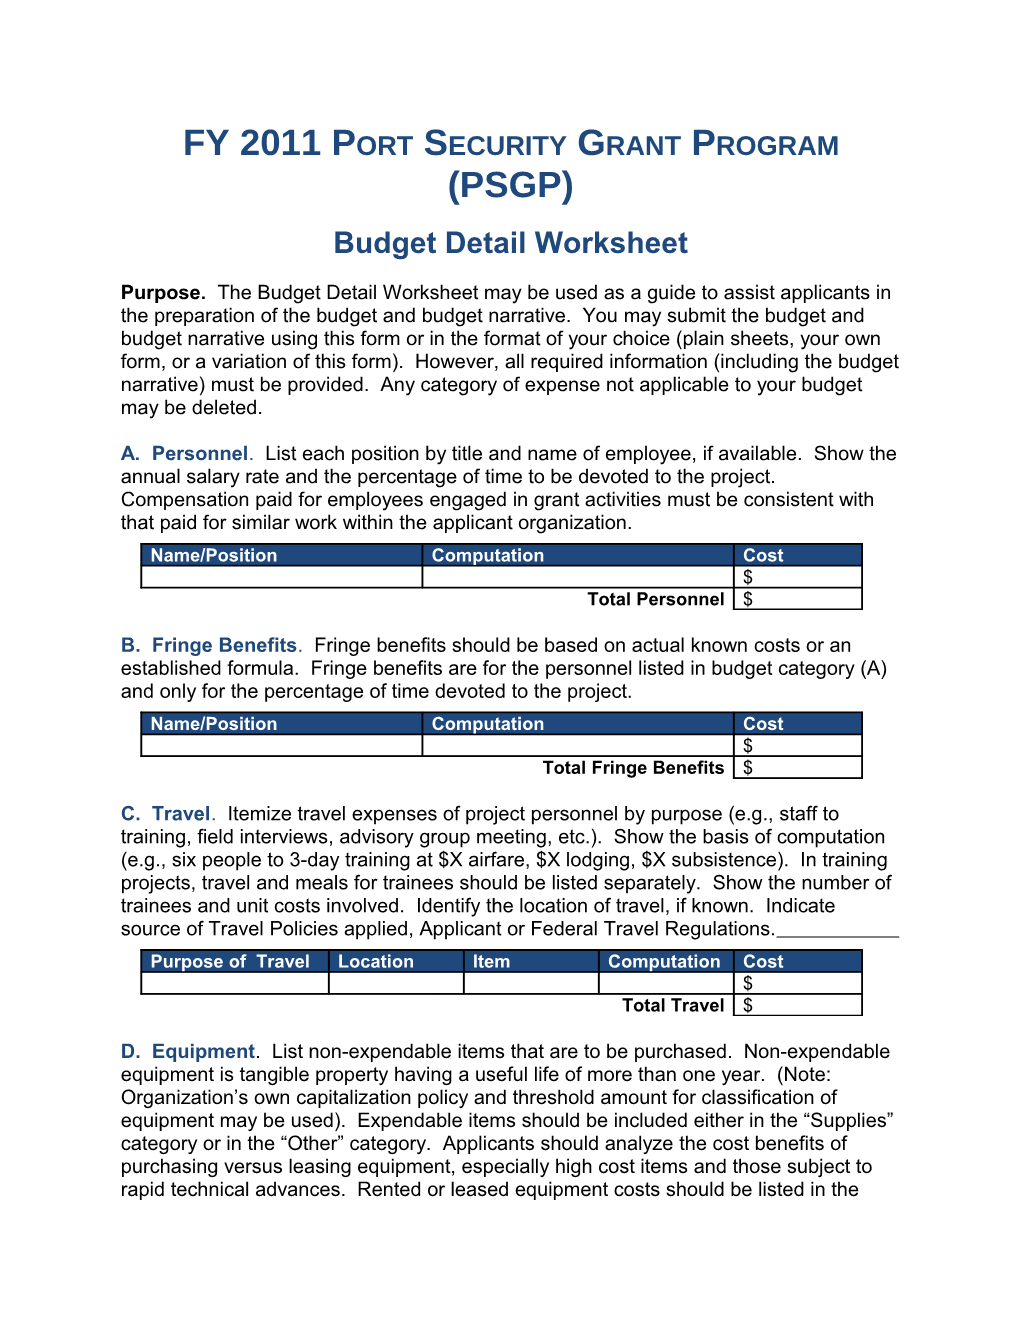 Sample Budget Detail Worksheet